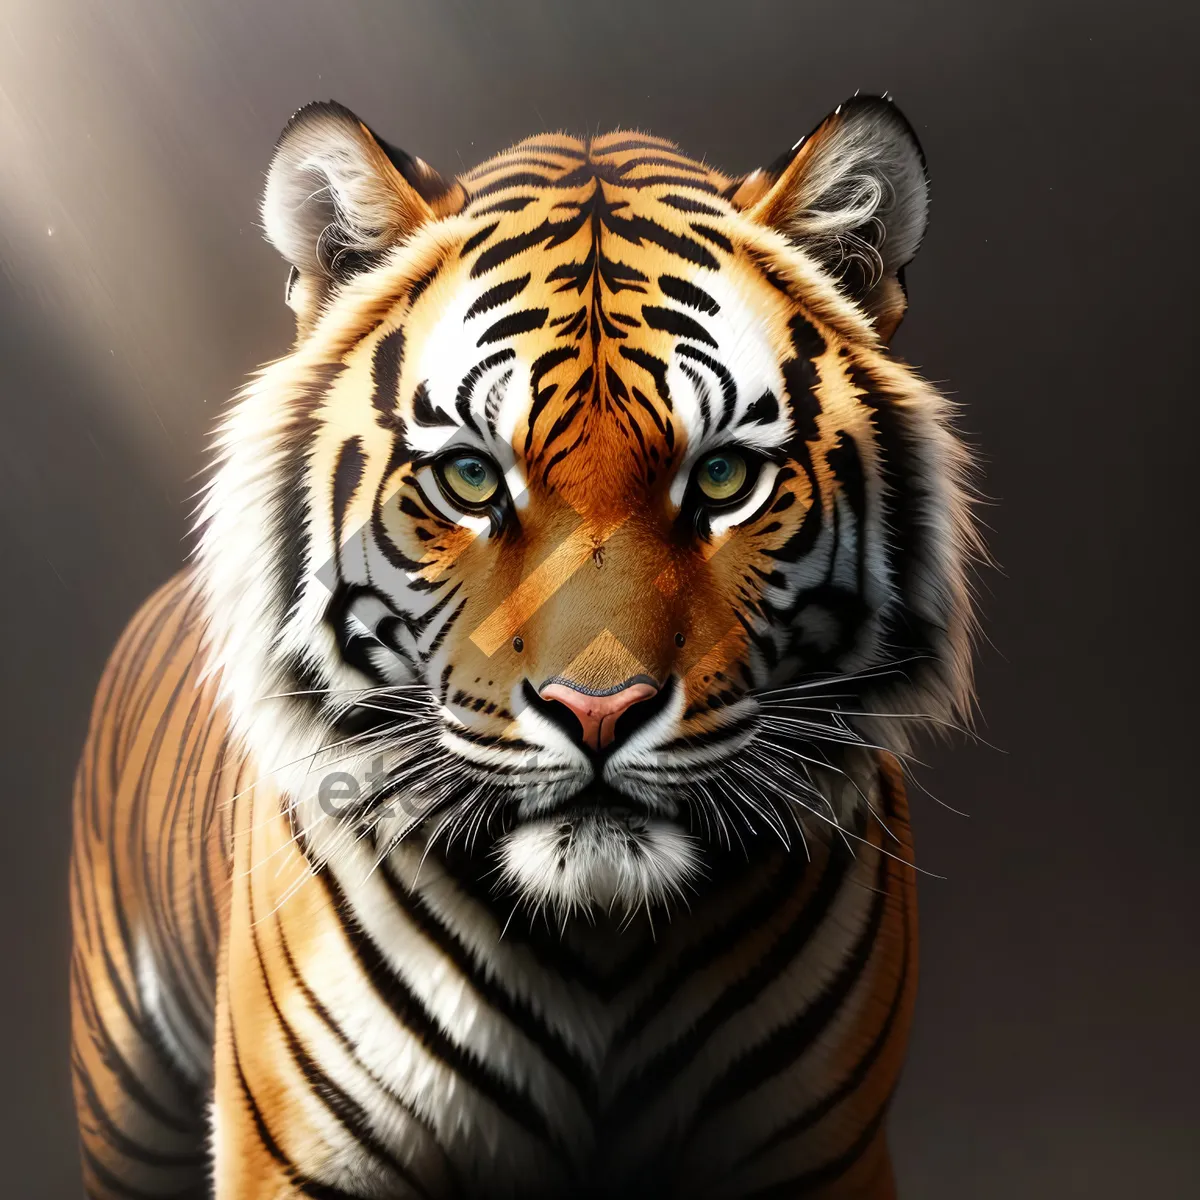 Picture of Fierce Striped Predator: Majestic Tiger Cat in the Wild